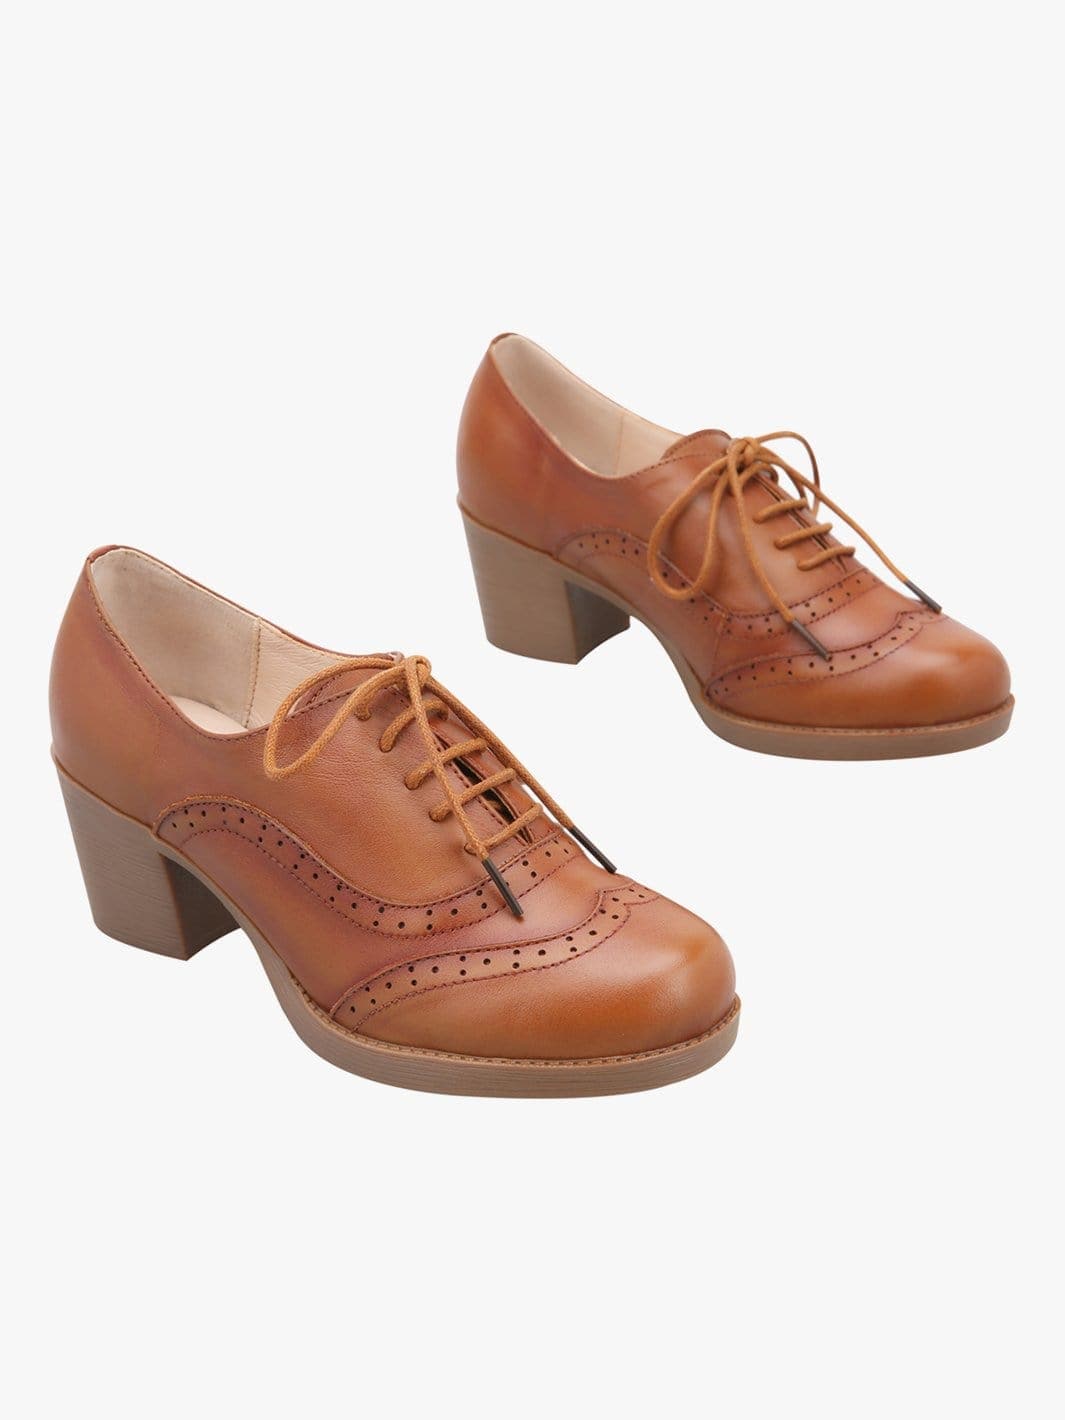 praise Estimate Detector Vintage Leather Shoes for Women - Handmade & Stylish– Ecosusi